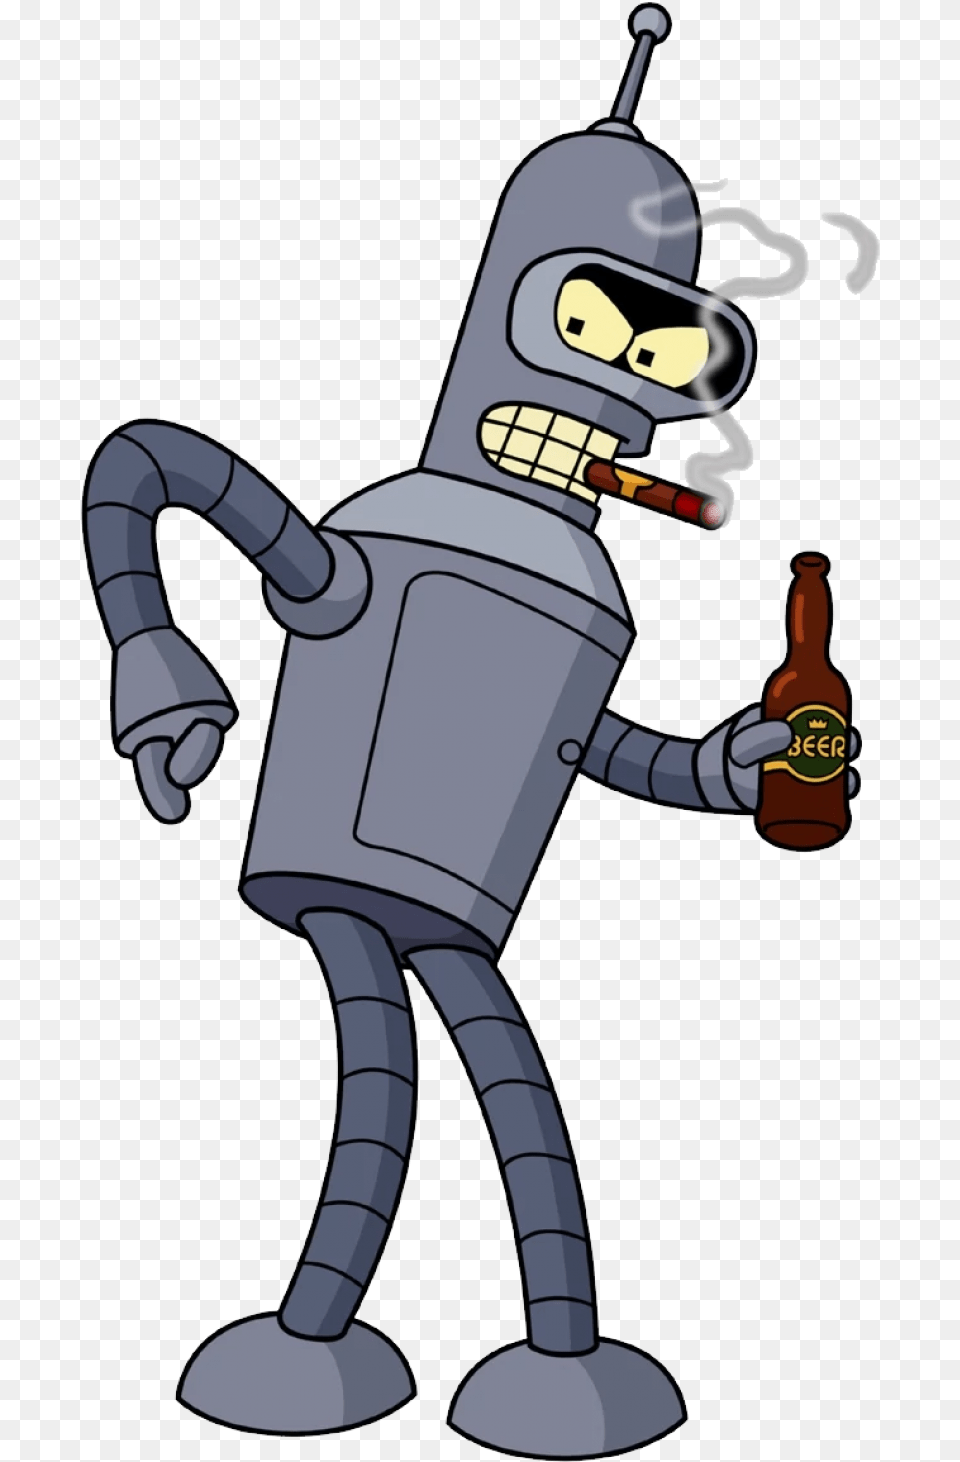 Futurama Bender Image Bender, Cartoon, Alcohol, Beer, Beverage Free Transparent Png